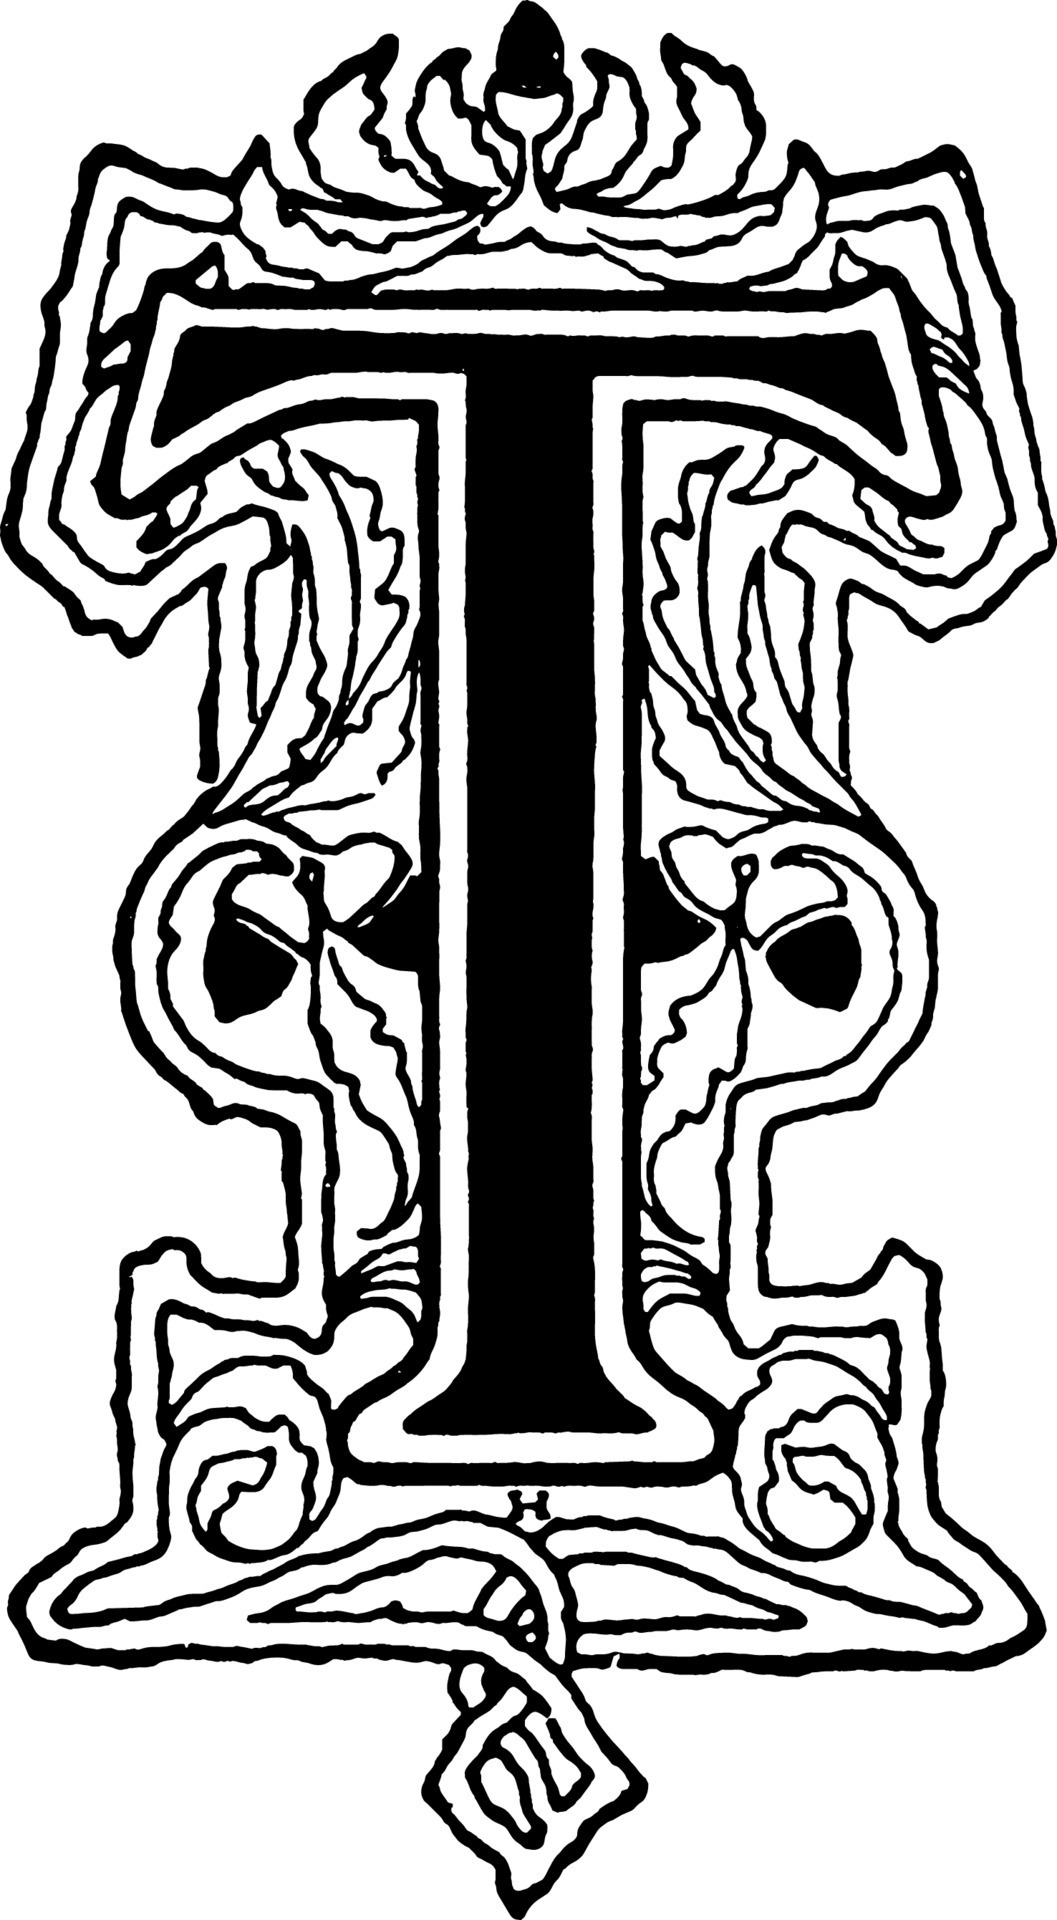 Герб буквы т. Буква т. Стилизованная буква т. Стилизованная буква т для логотипа. Готическая буква t.